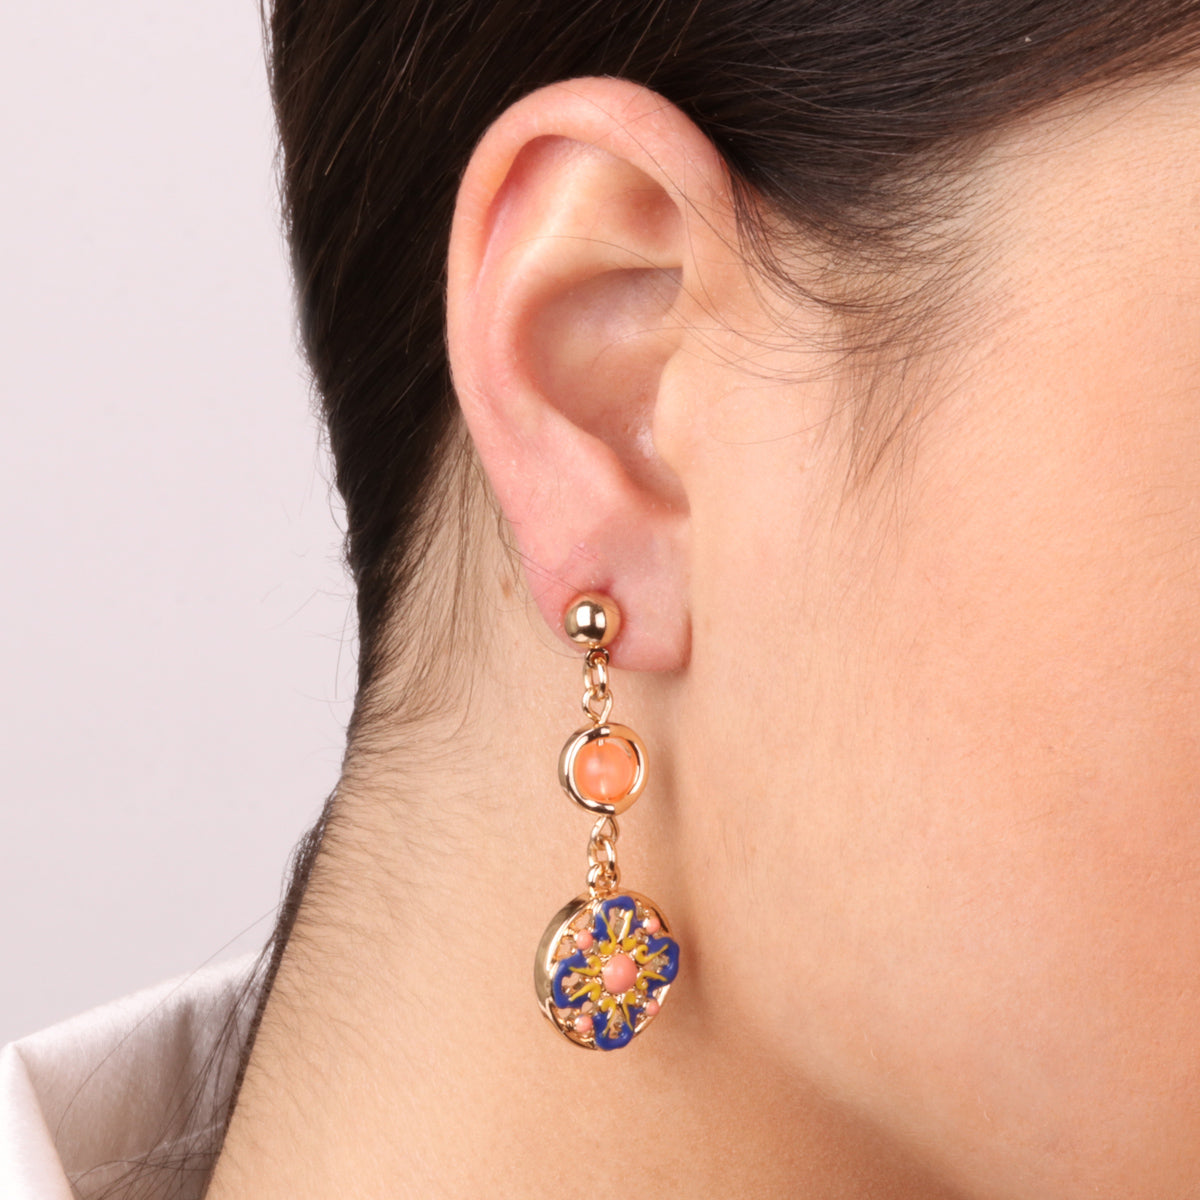 Metal earrings with majolica pendant